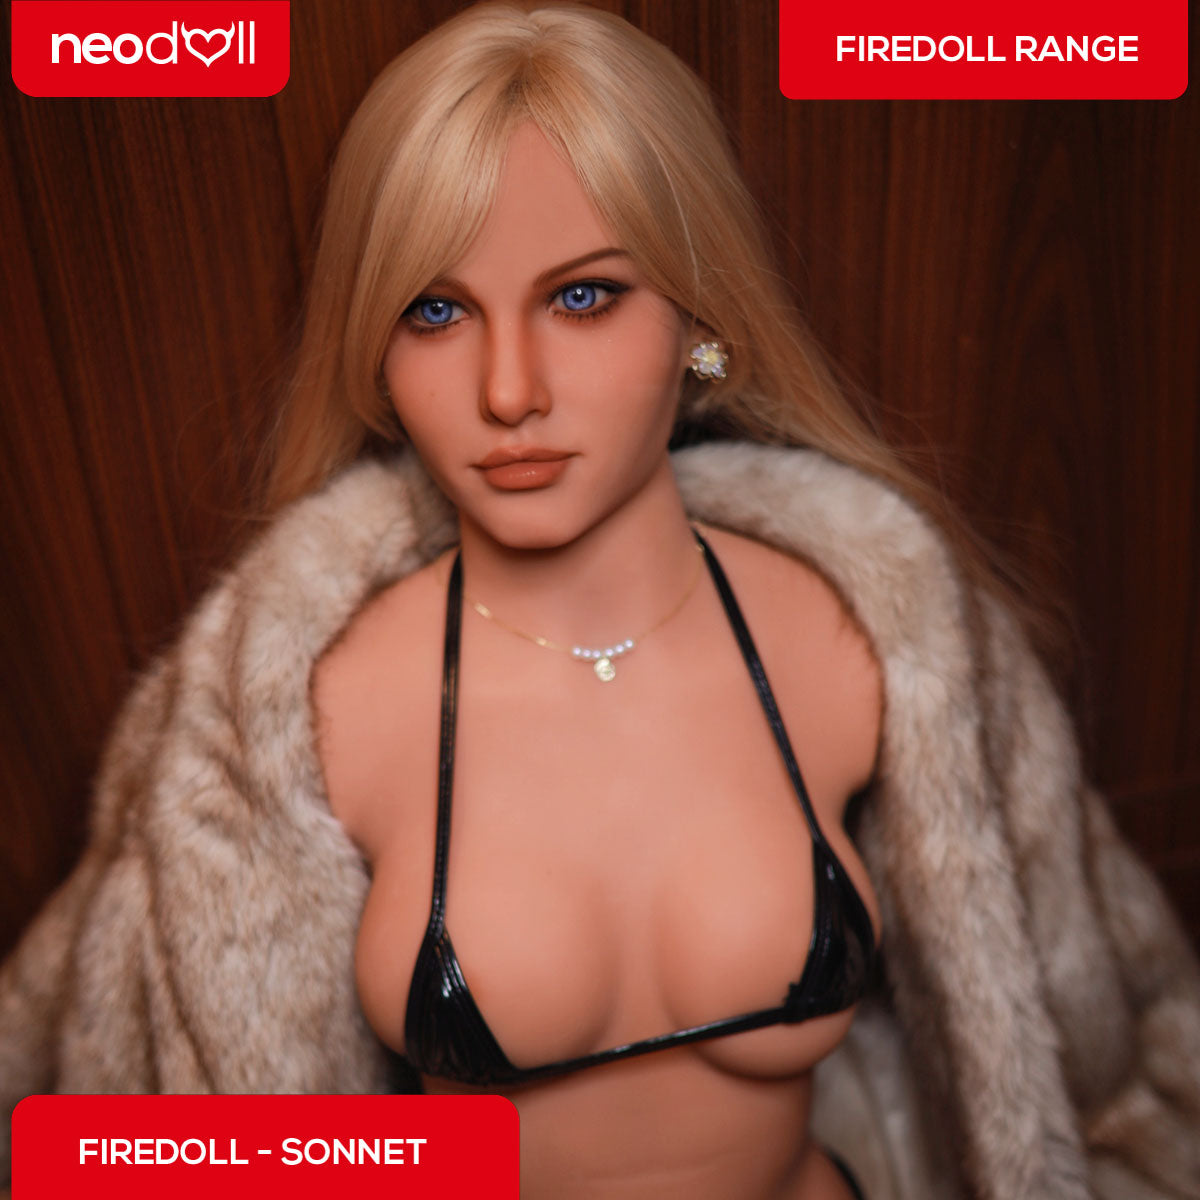 Firedoll Torso - Sonnet- Realistic Sex Doll Torso - Light tan